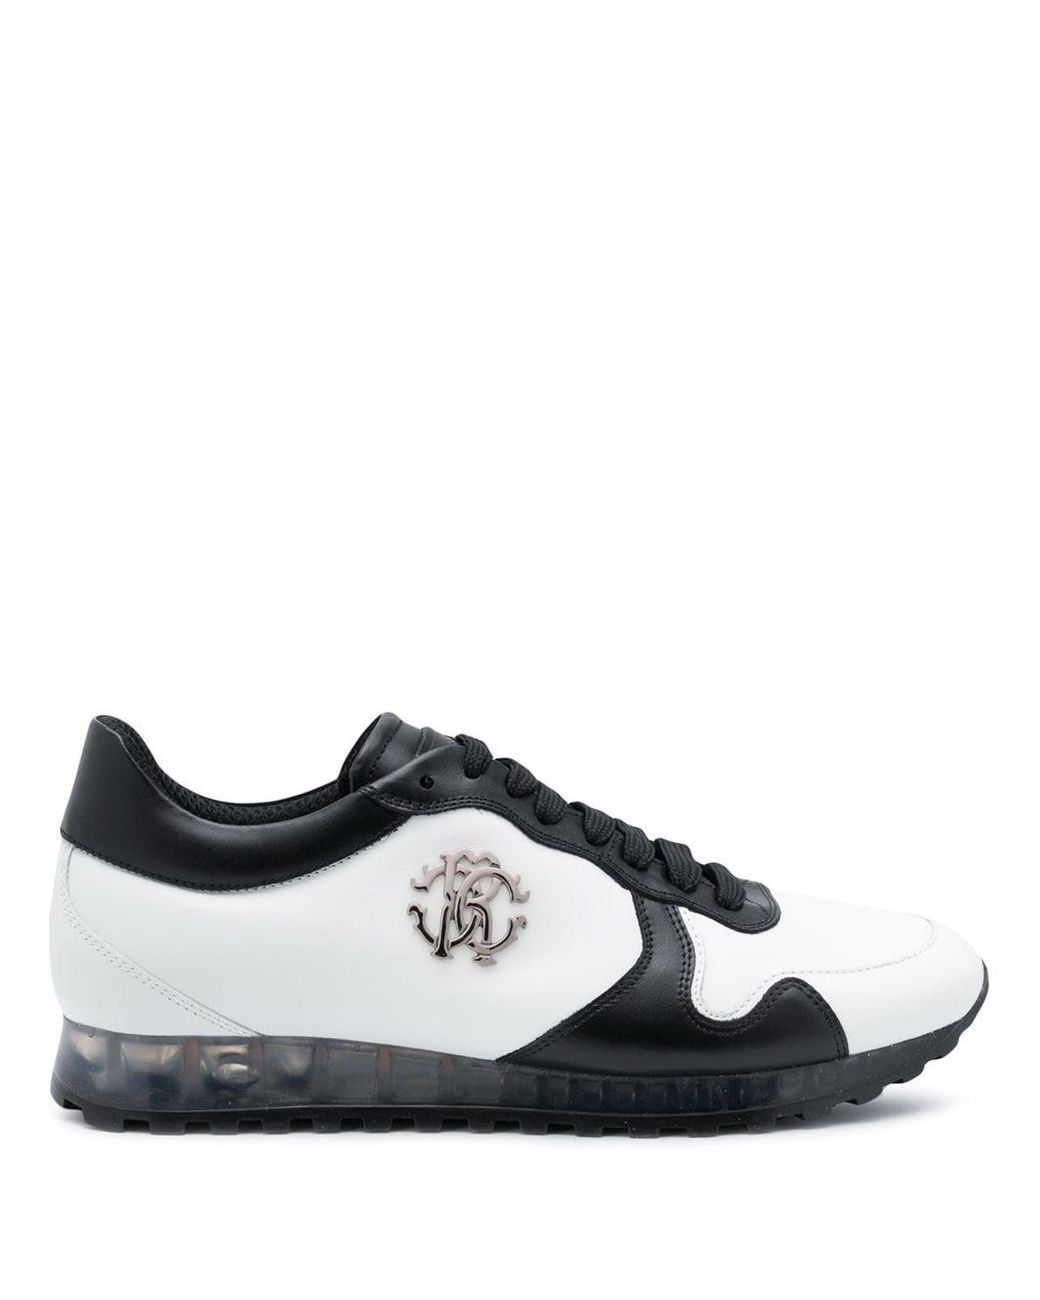 Roberto Cavalli Leather Rc Monogram Sneakers in White for Men - Lyst